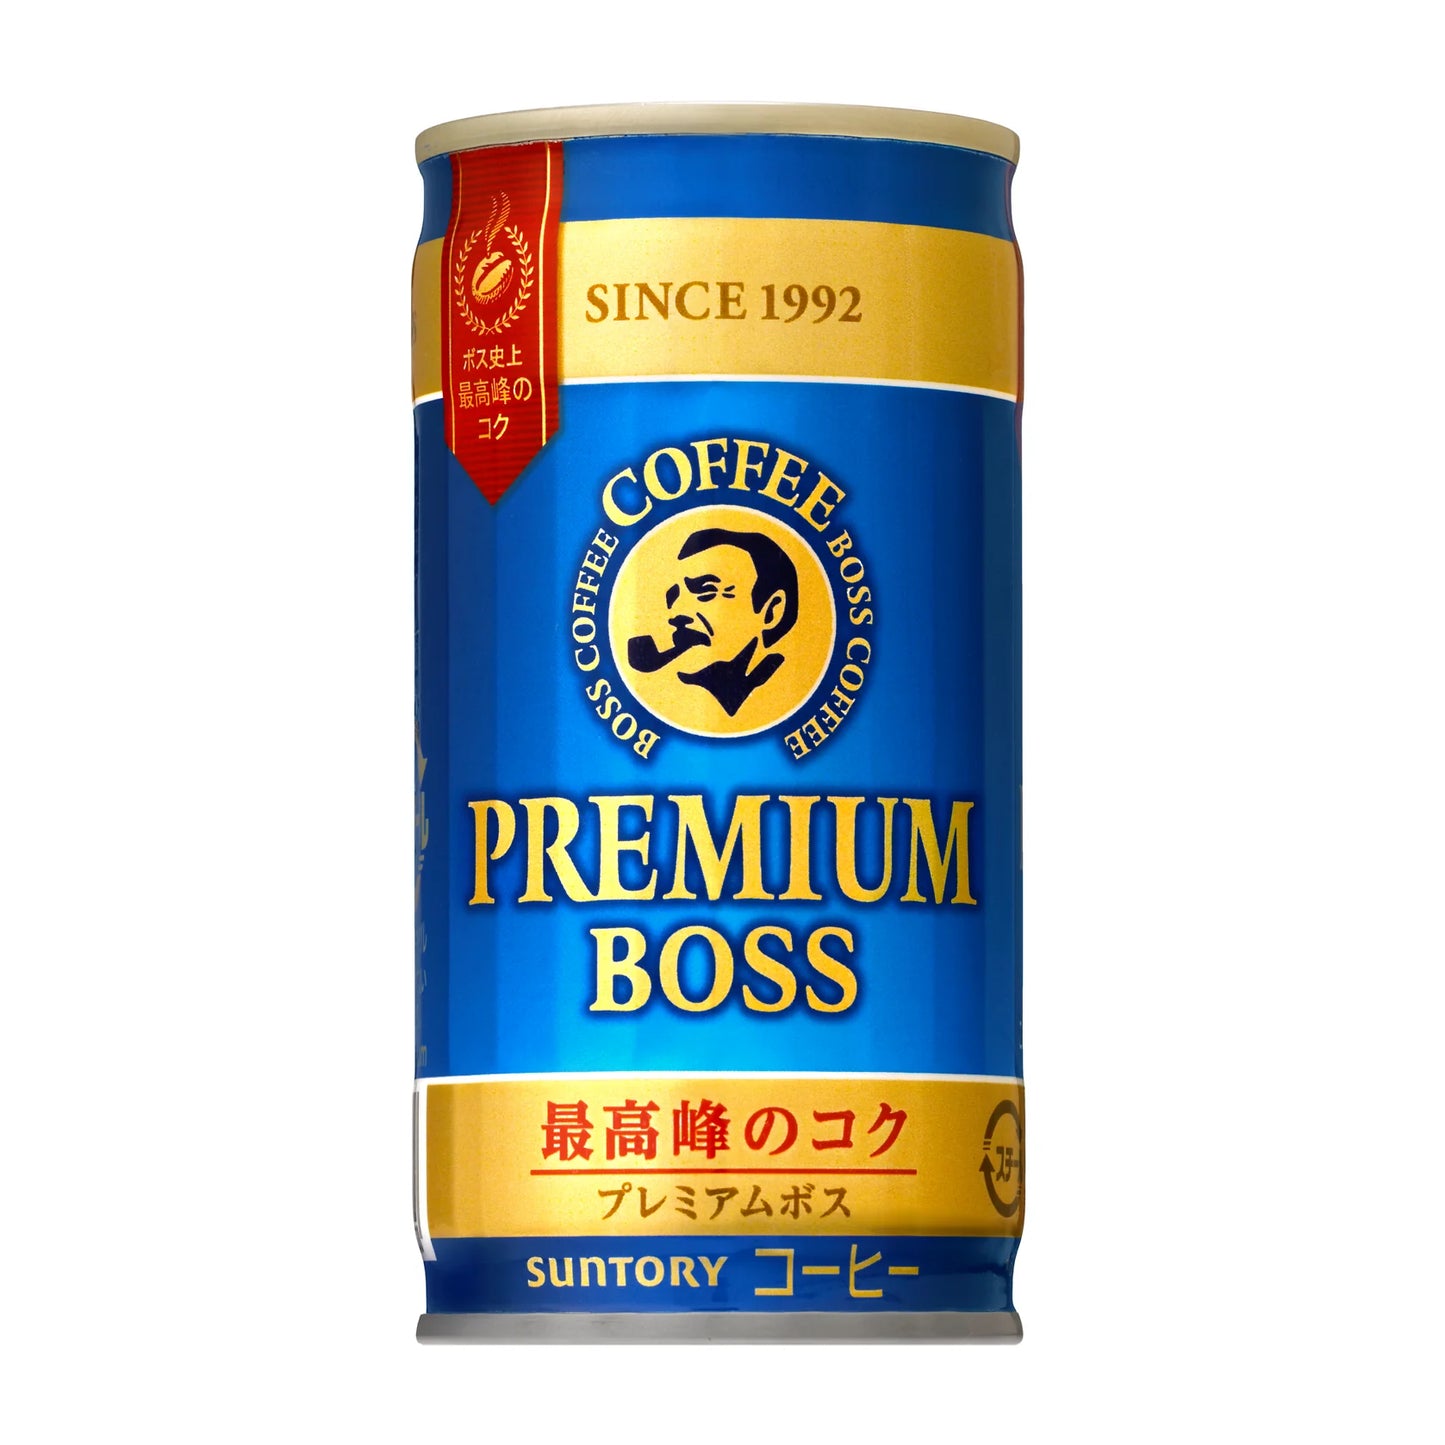 SUNTORY Boss Premium Coffee